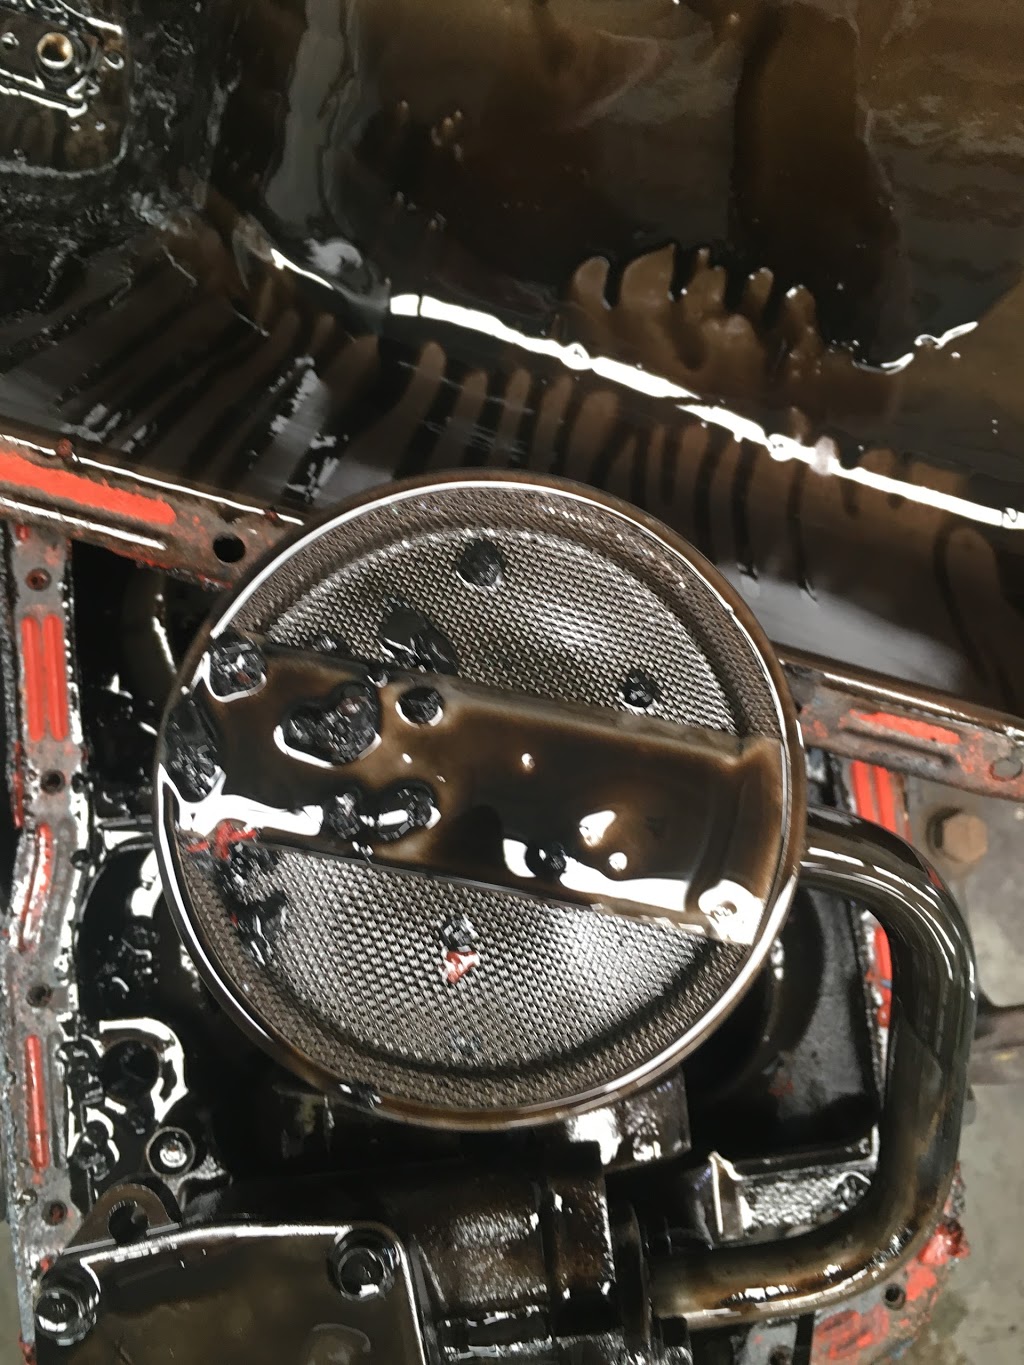 Rowdys Mechanical | car repair | 43 Macartney St, York WA 6302, Australia | 0417958290 OR +61 417 958 290